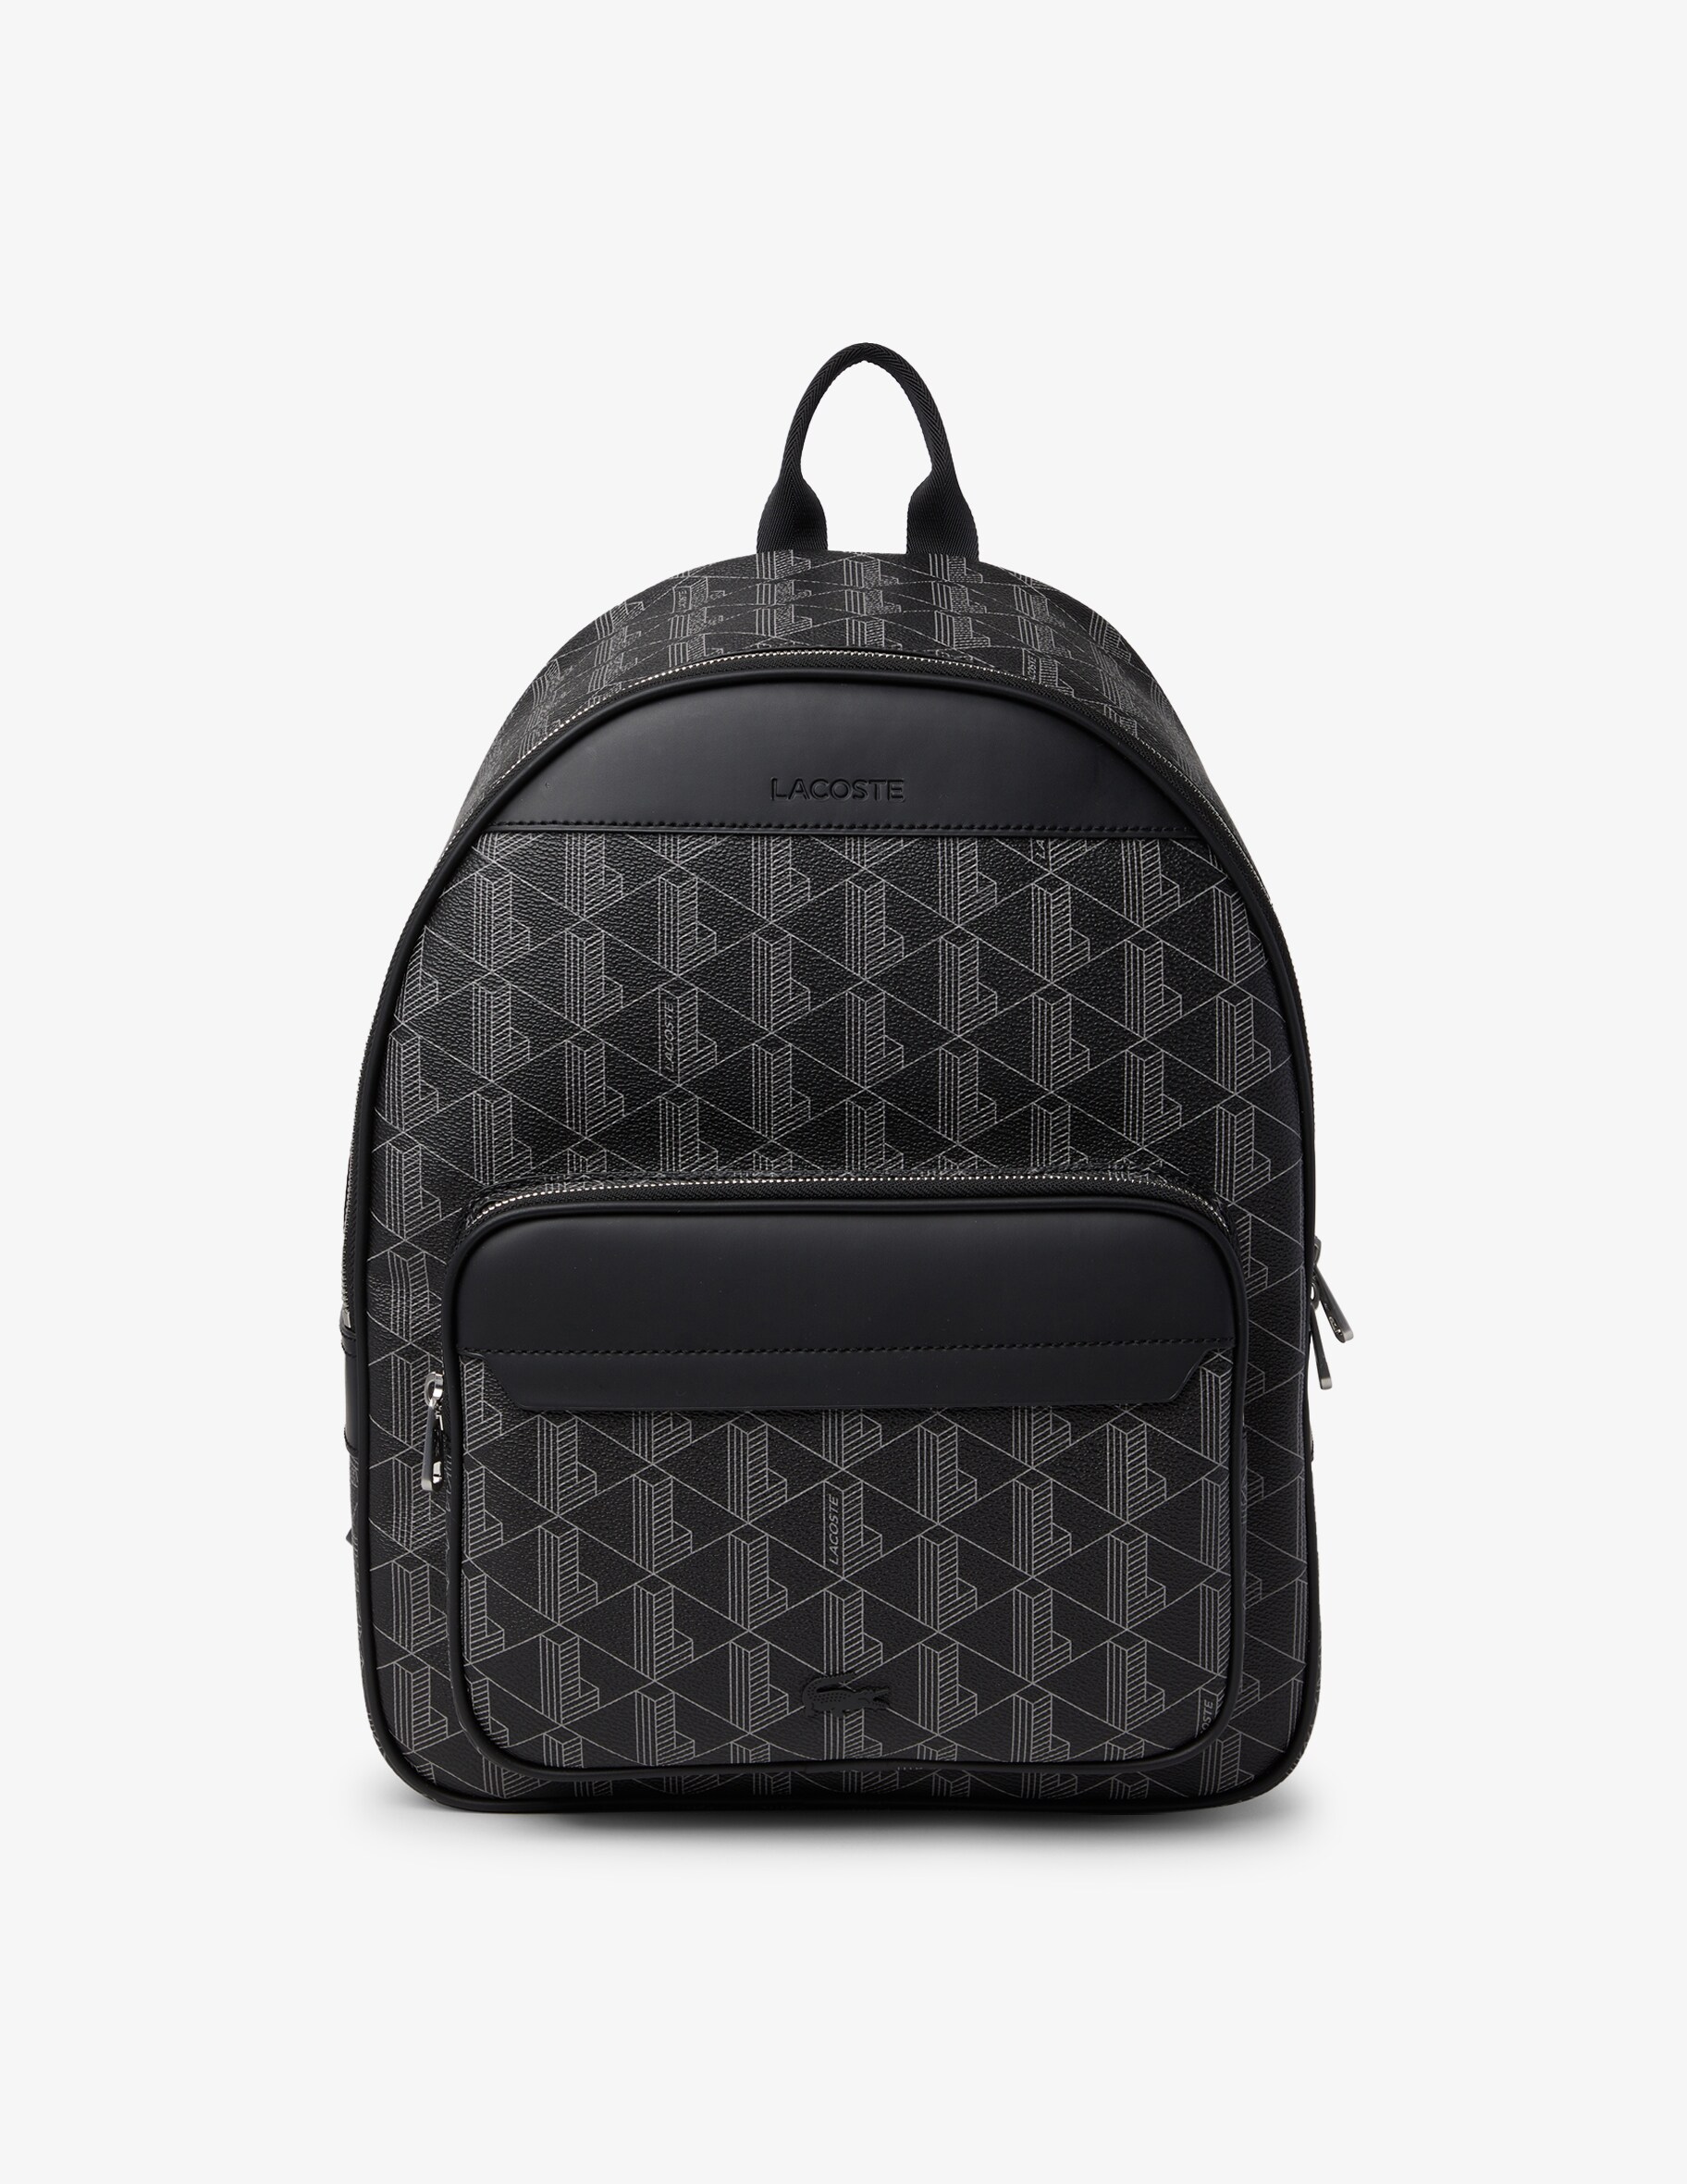 Рюкзак с логотипом Lacoste, черный рюкзак с логотипом маршмеллоу fortnite черный